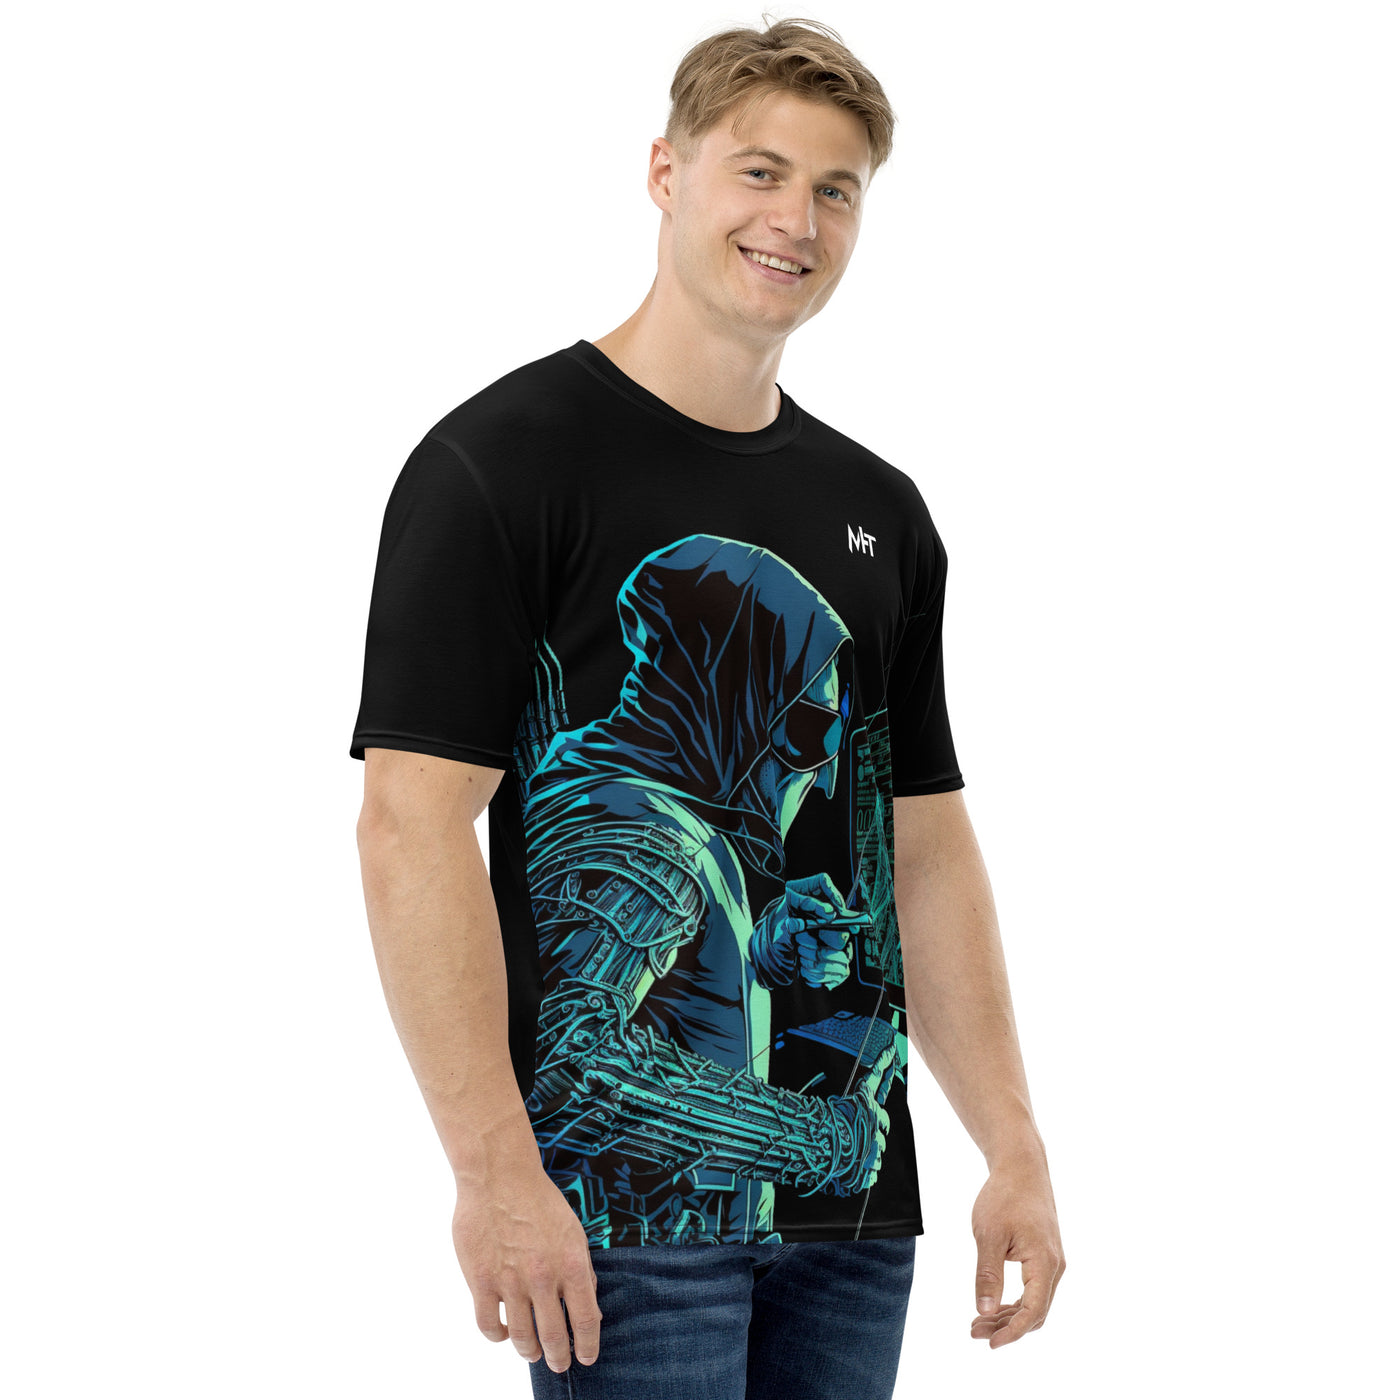 CyberWare Assassin - Men's t-shirt